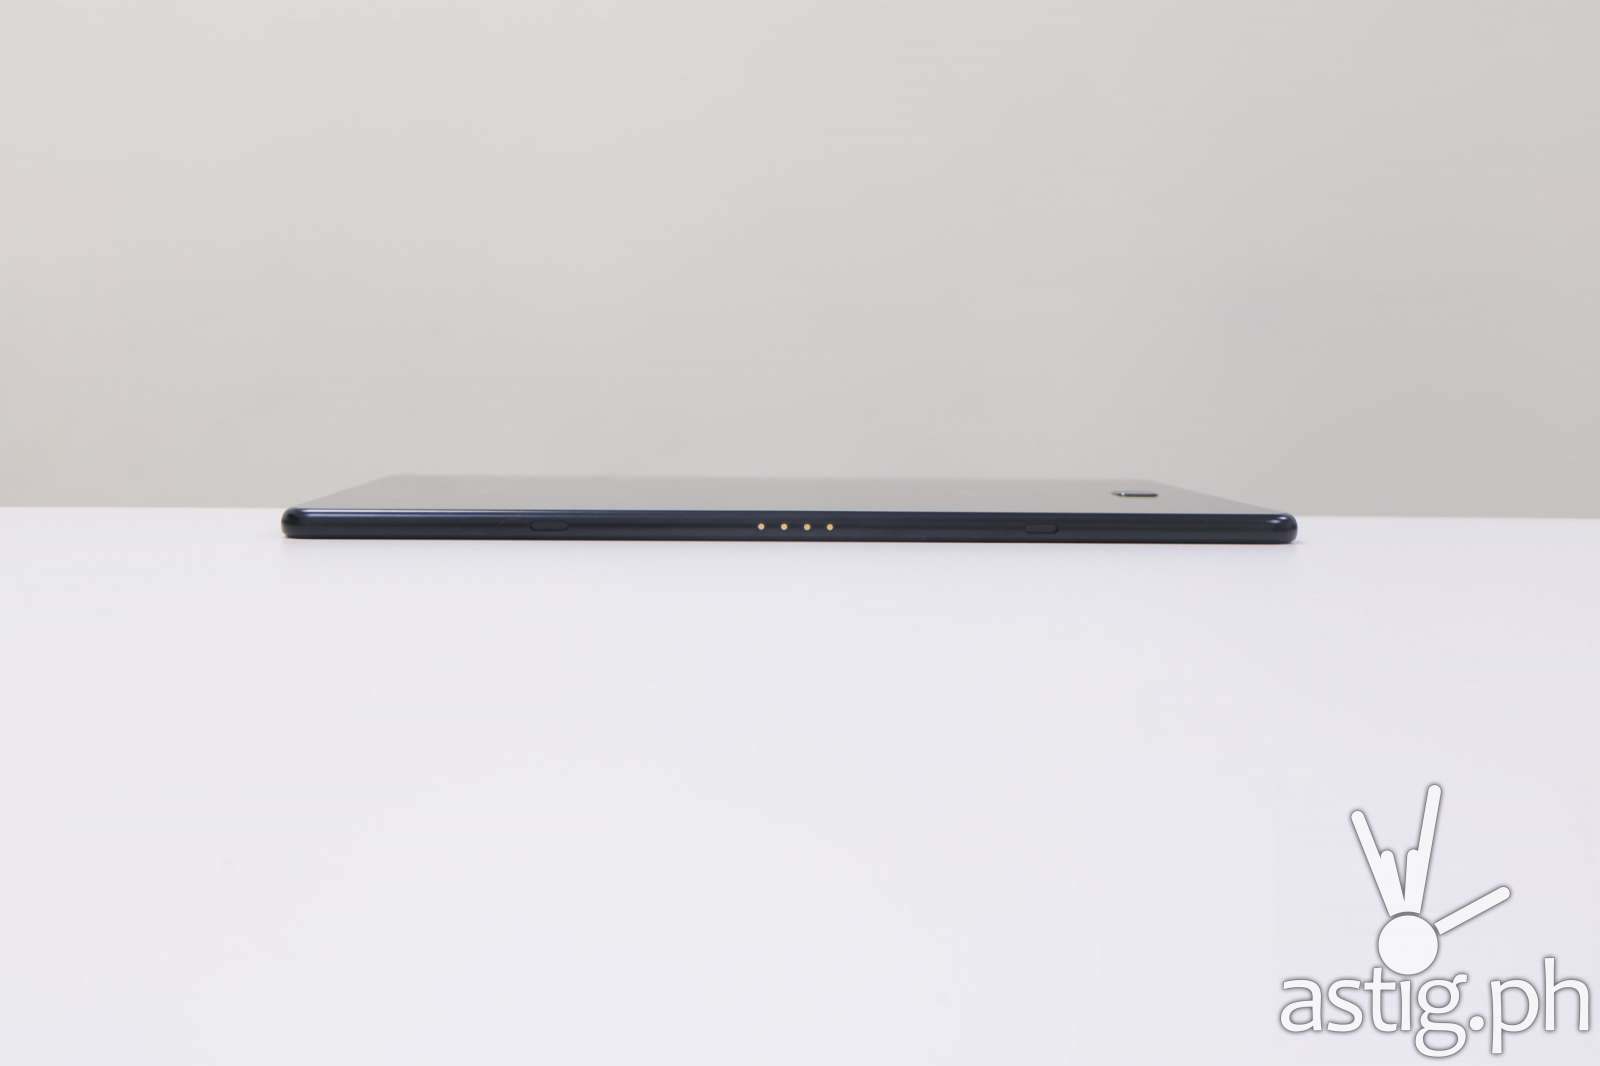 Side lying - Samsung Galaxy Tab S4 (Philippines)